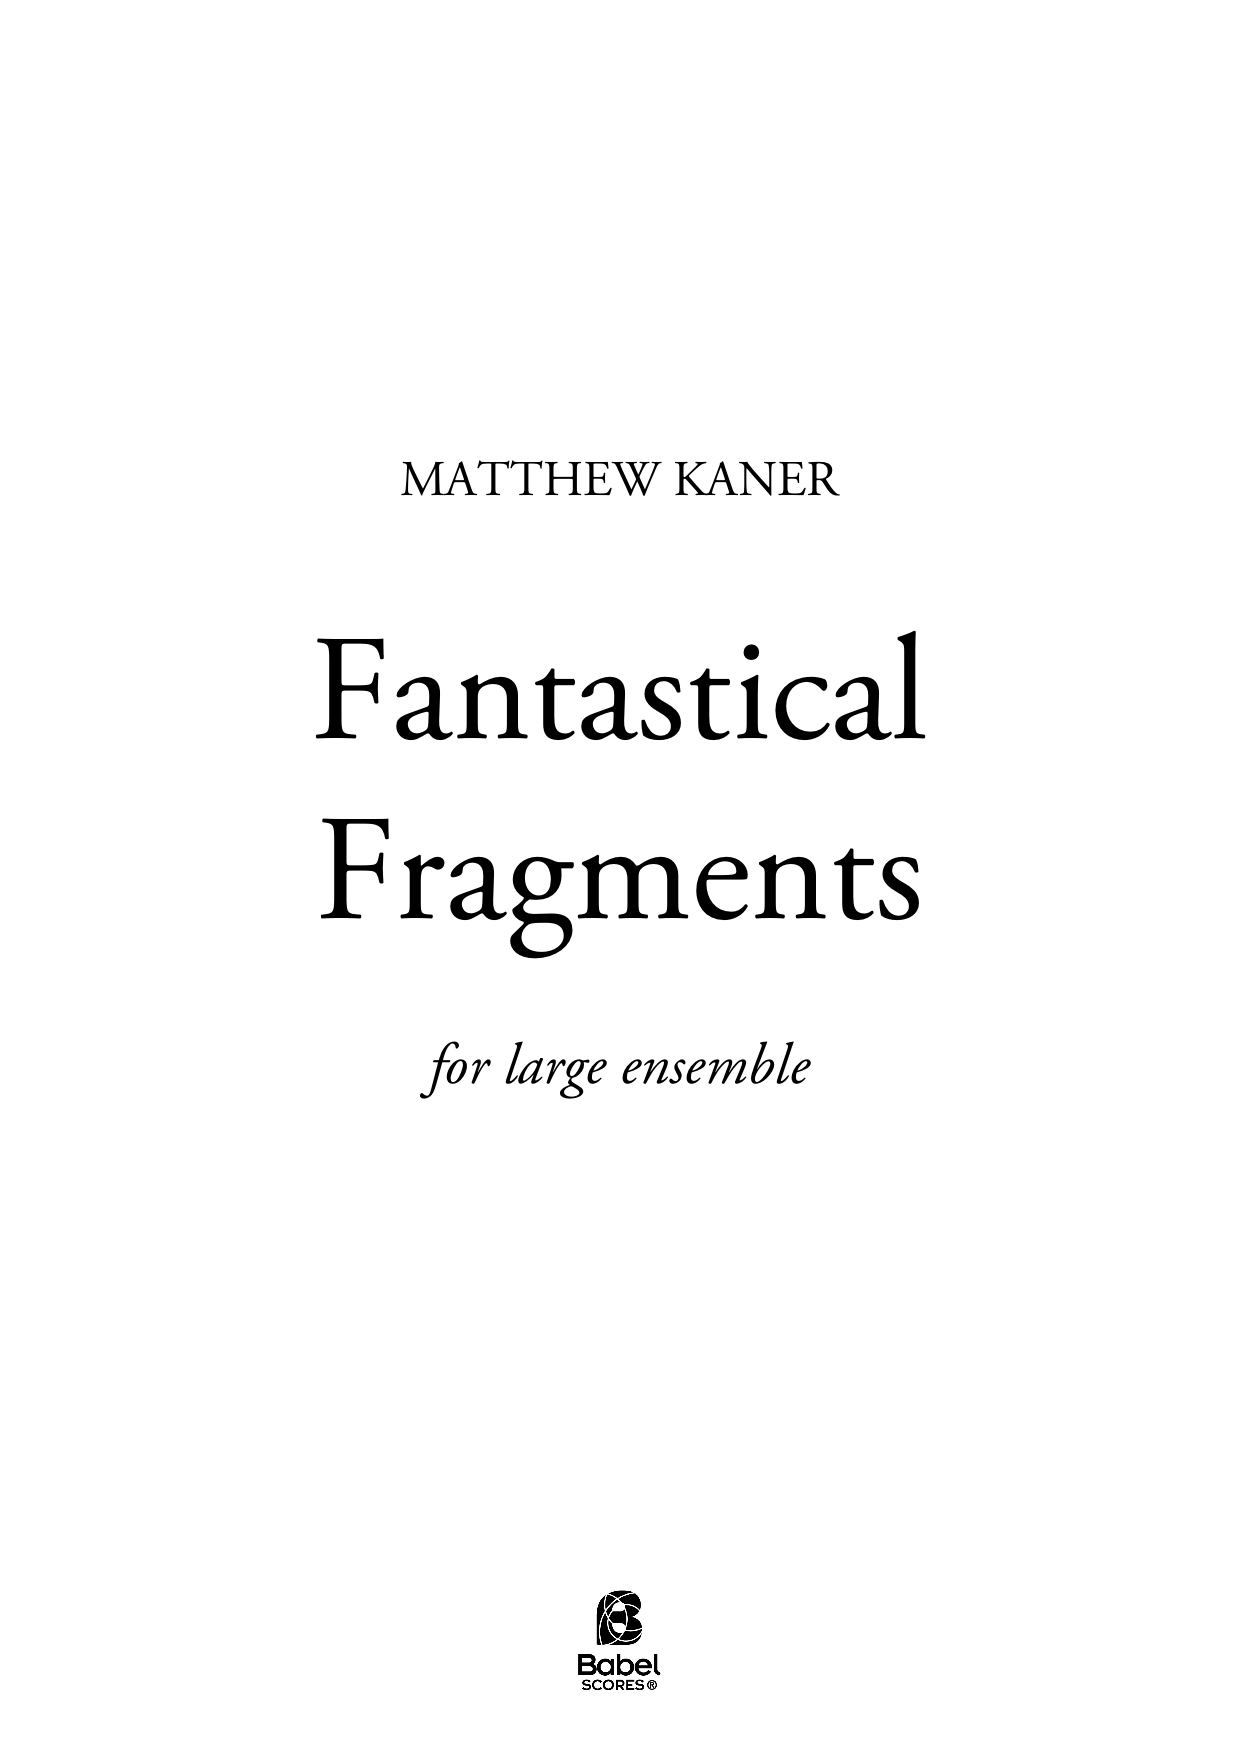 Fantastical Fragments A4 z 2 1 21